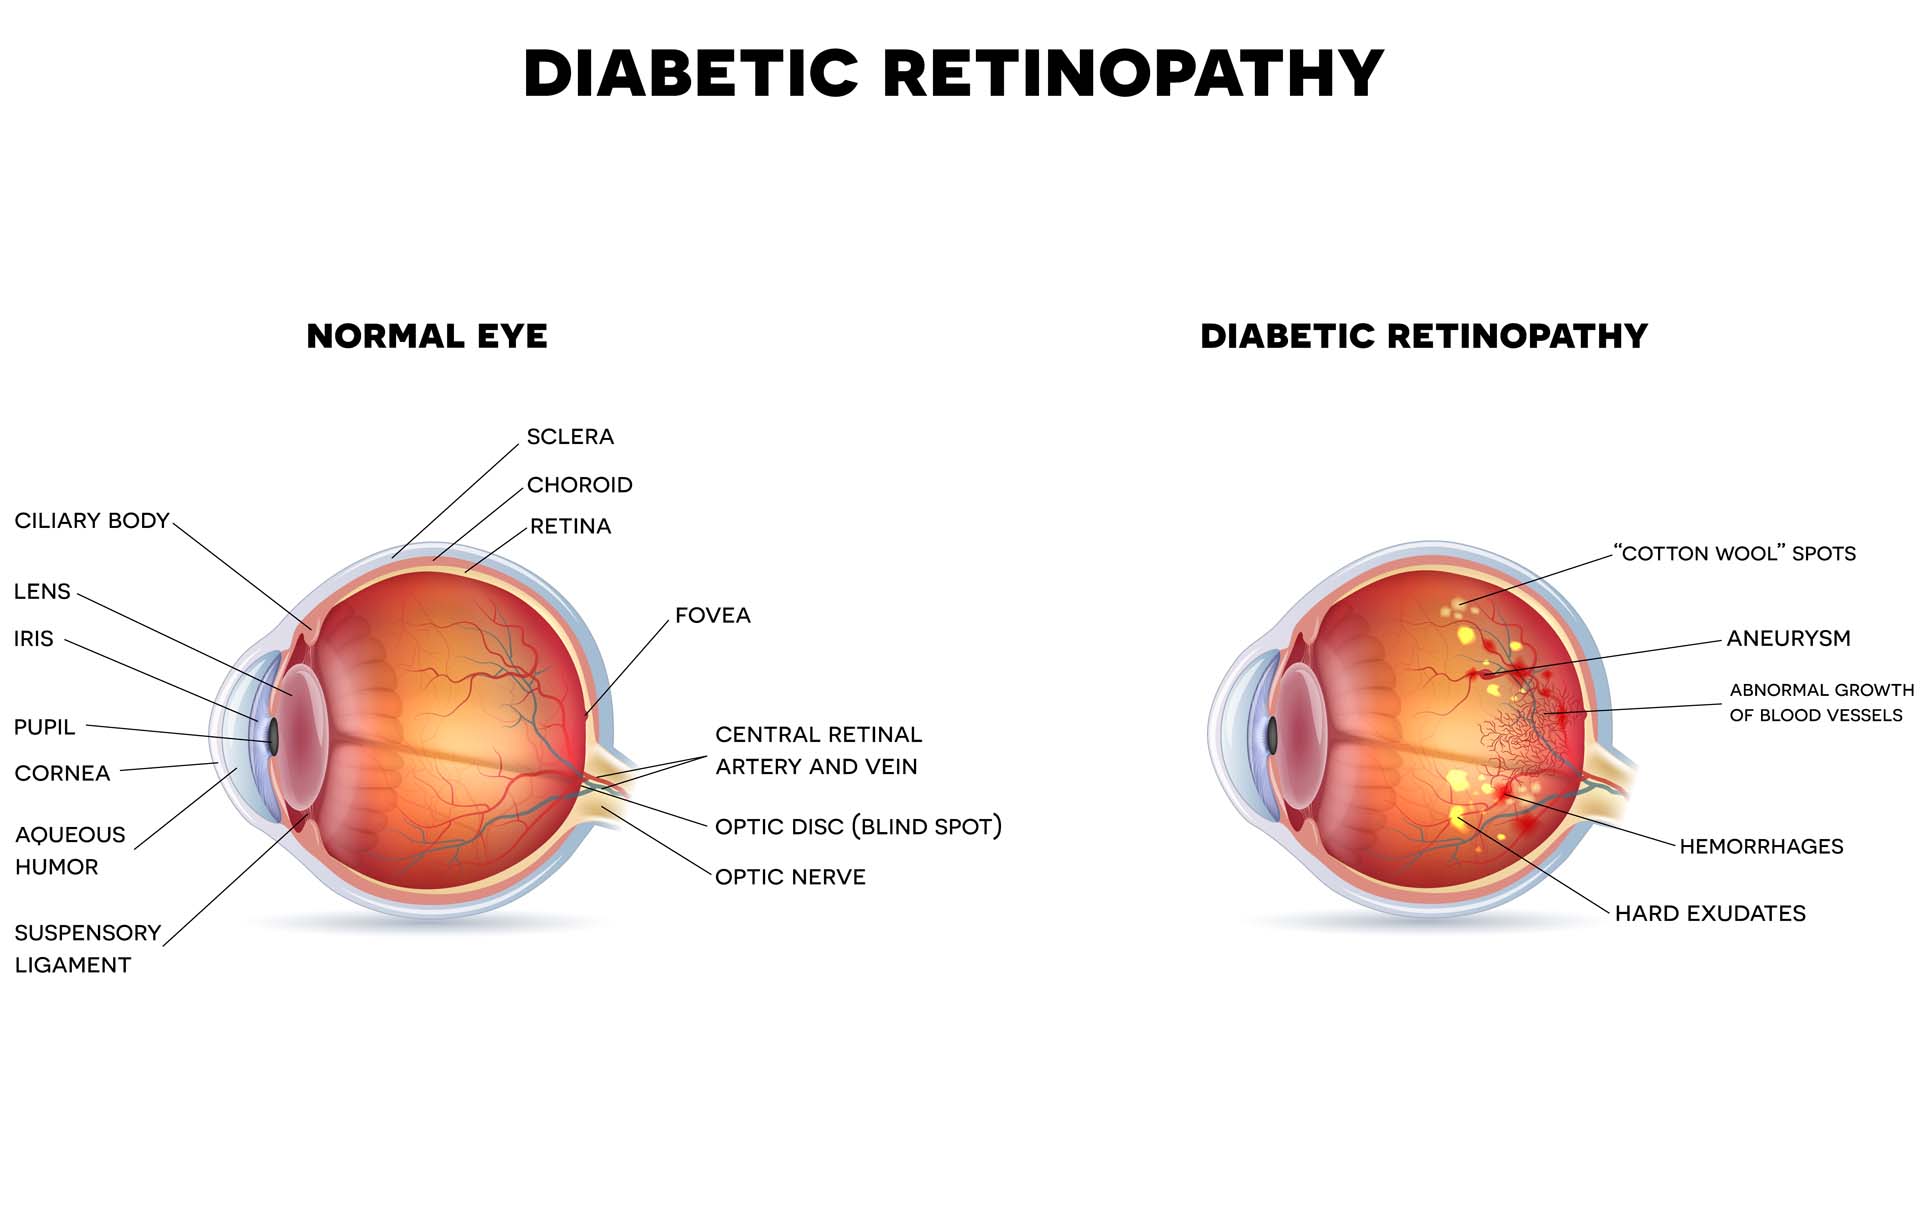 Diabetic retinopathy and healthy eye anatomy